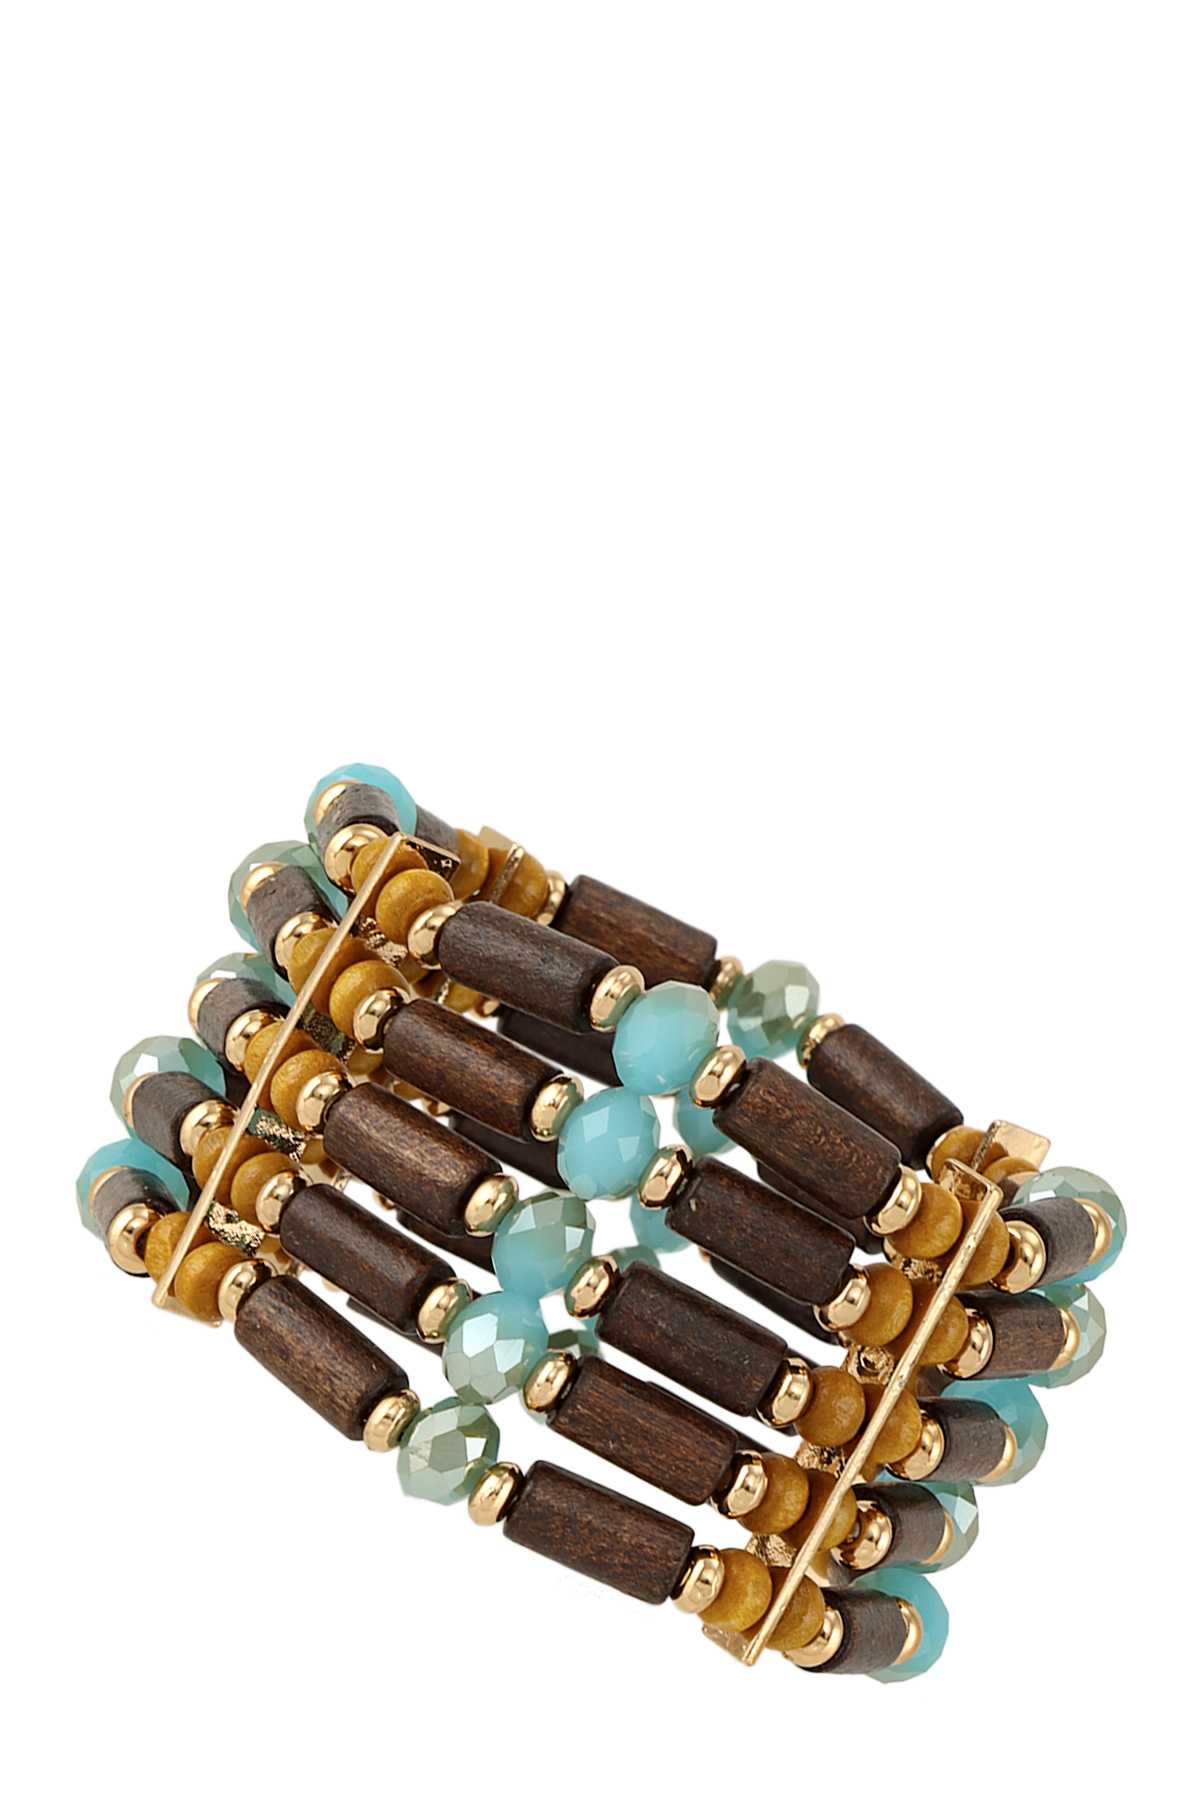 Multi shape wood beads stretch bracelet